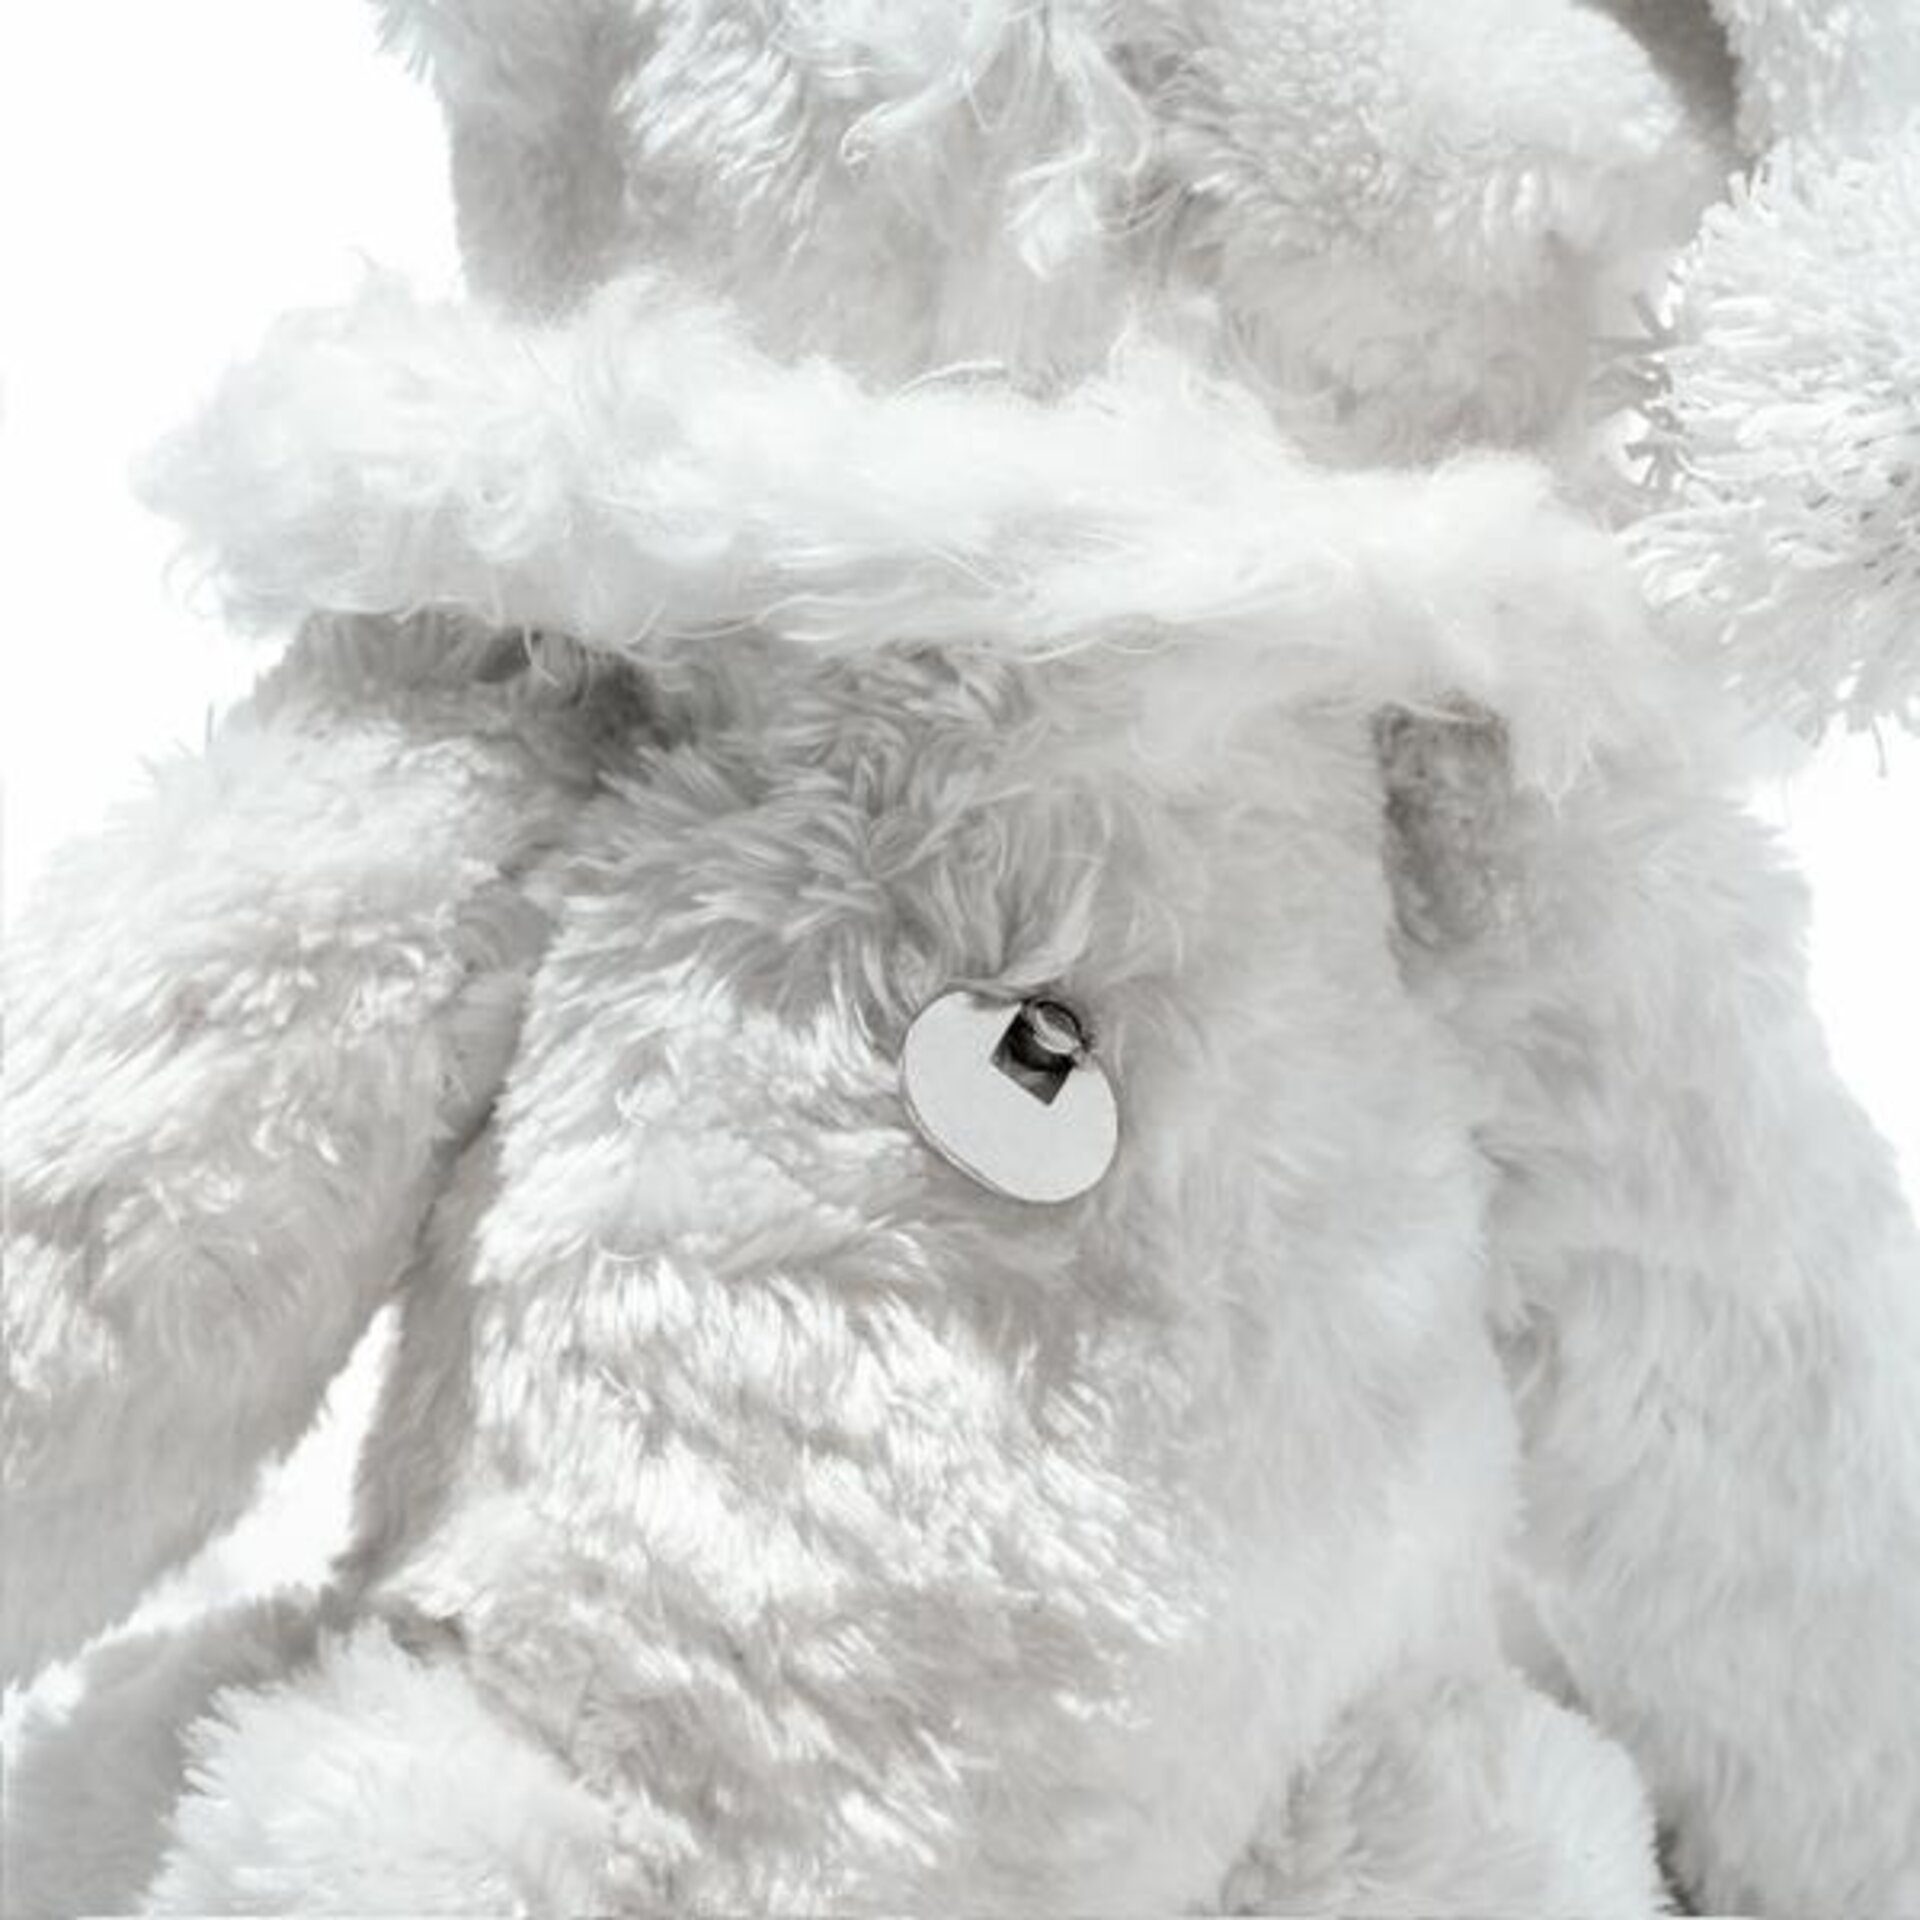 tomorrow cm Teddybär 30 Teddies Steiff Dekofigur White (007293) Christmas for